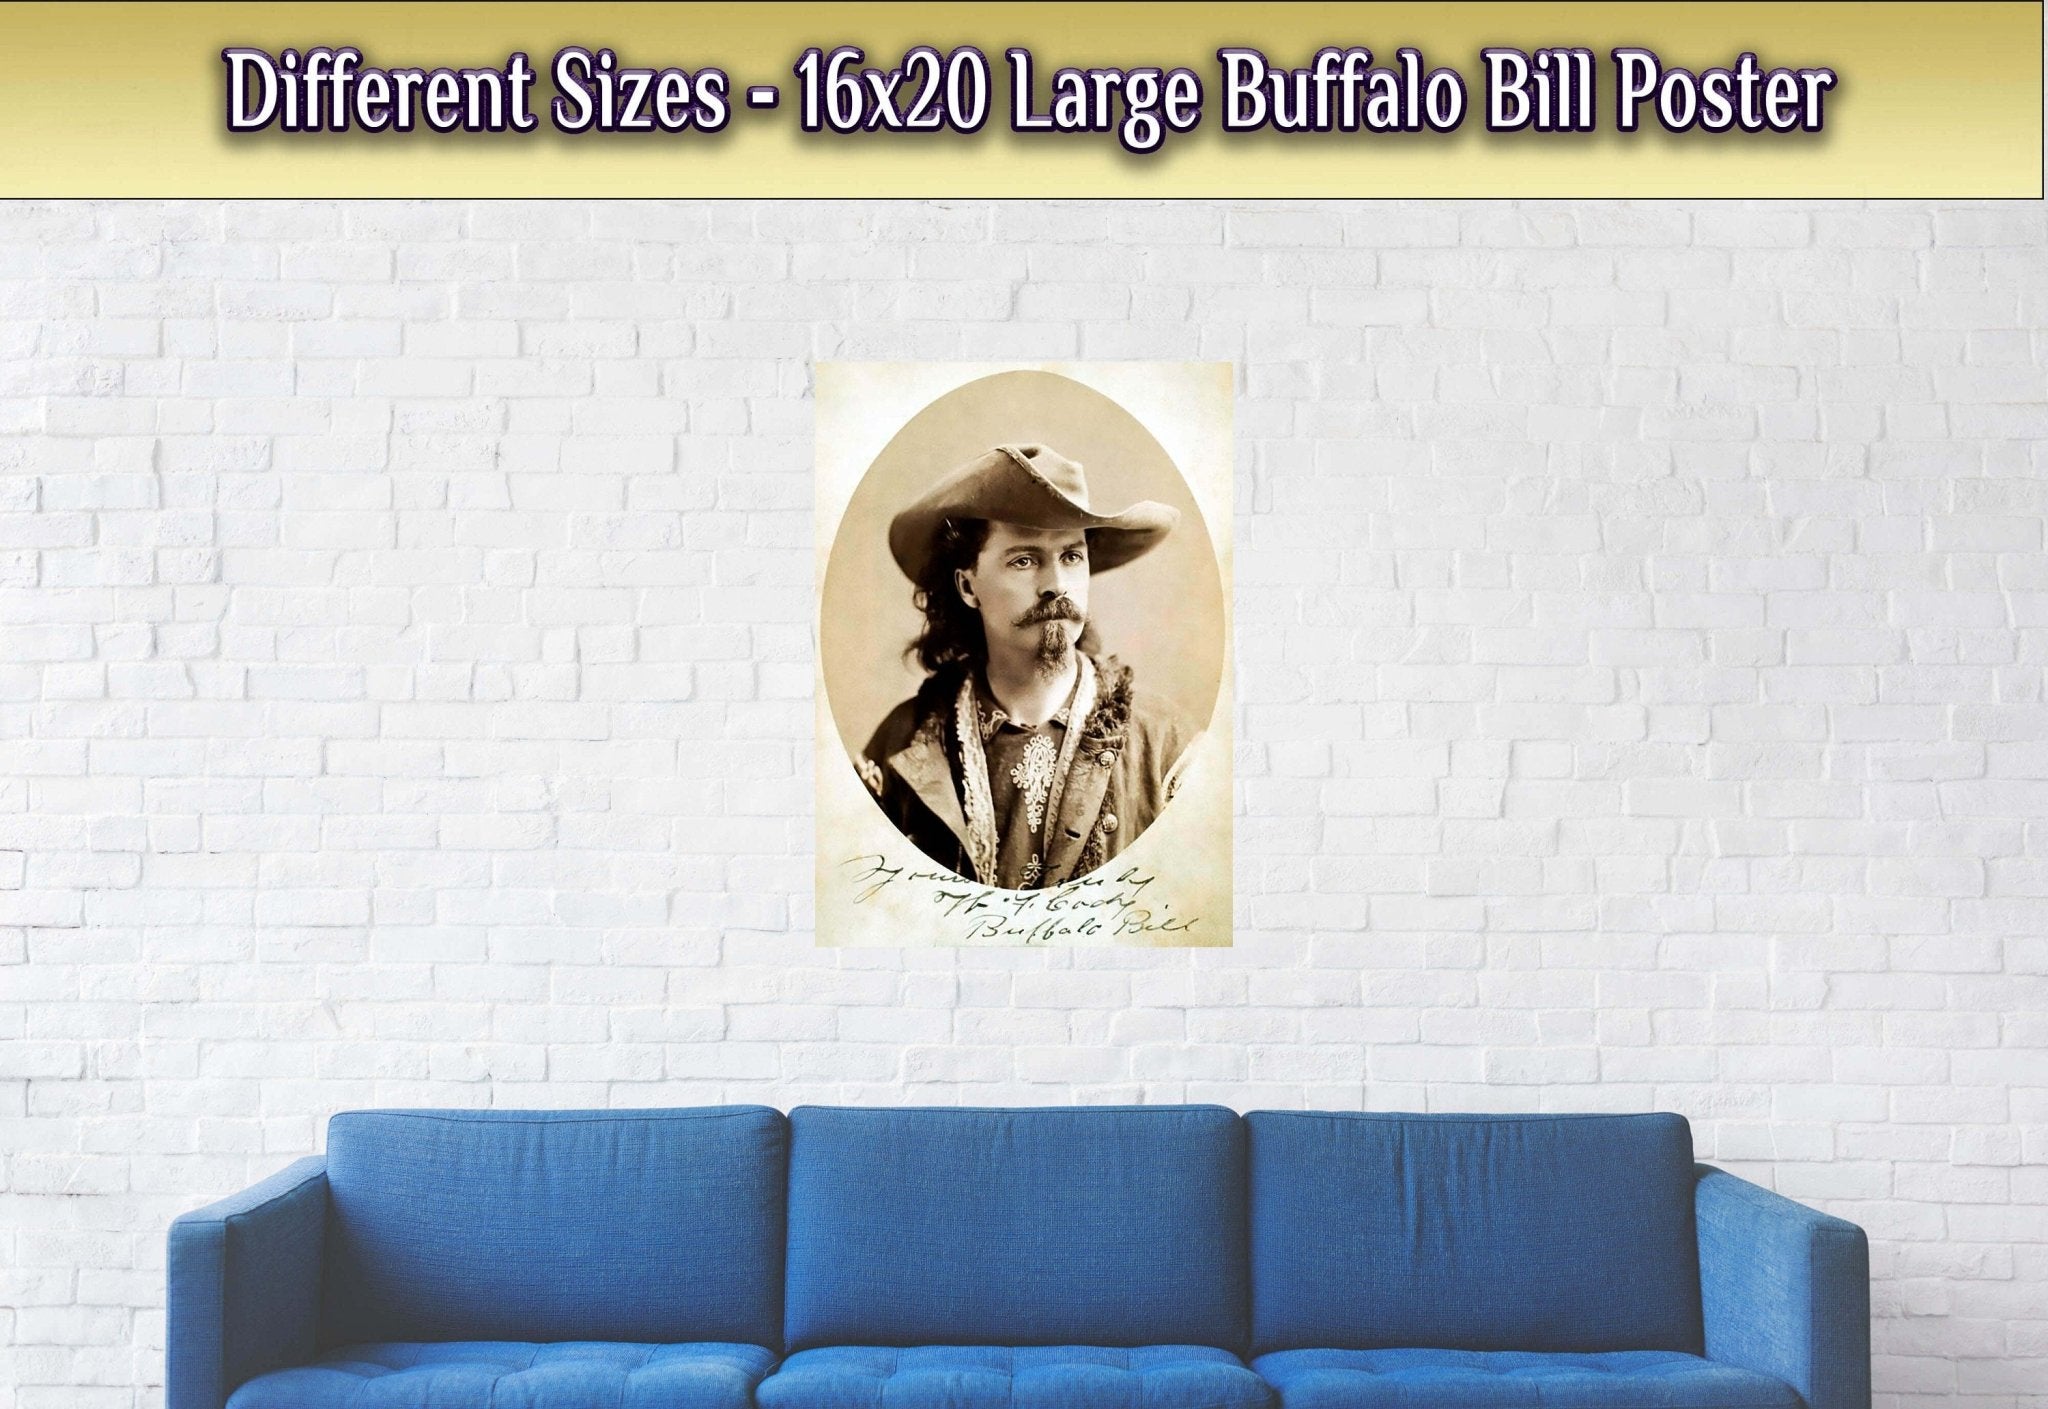 Buffalo Bills Poster, Wild West Legend, Vintage Photo - Buffalo Bill Print - Signed William Cody Poster - WallArtPrints4U